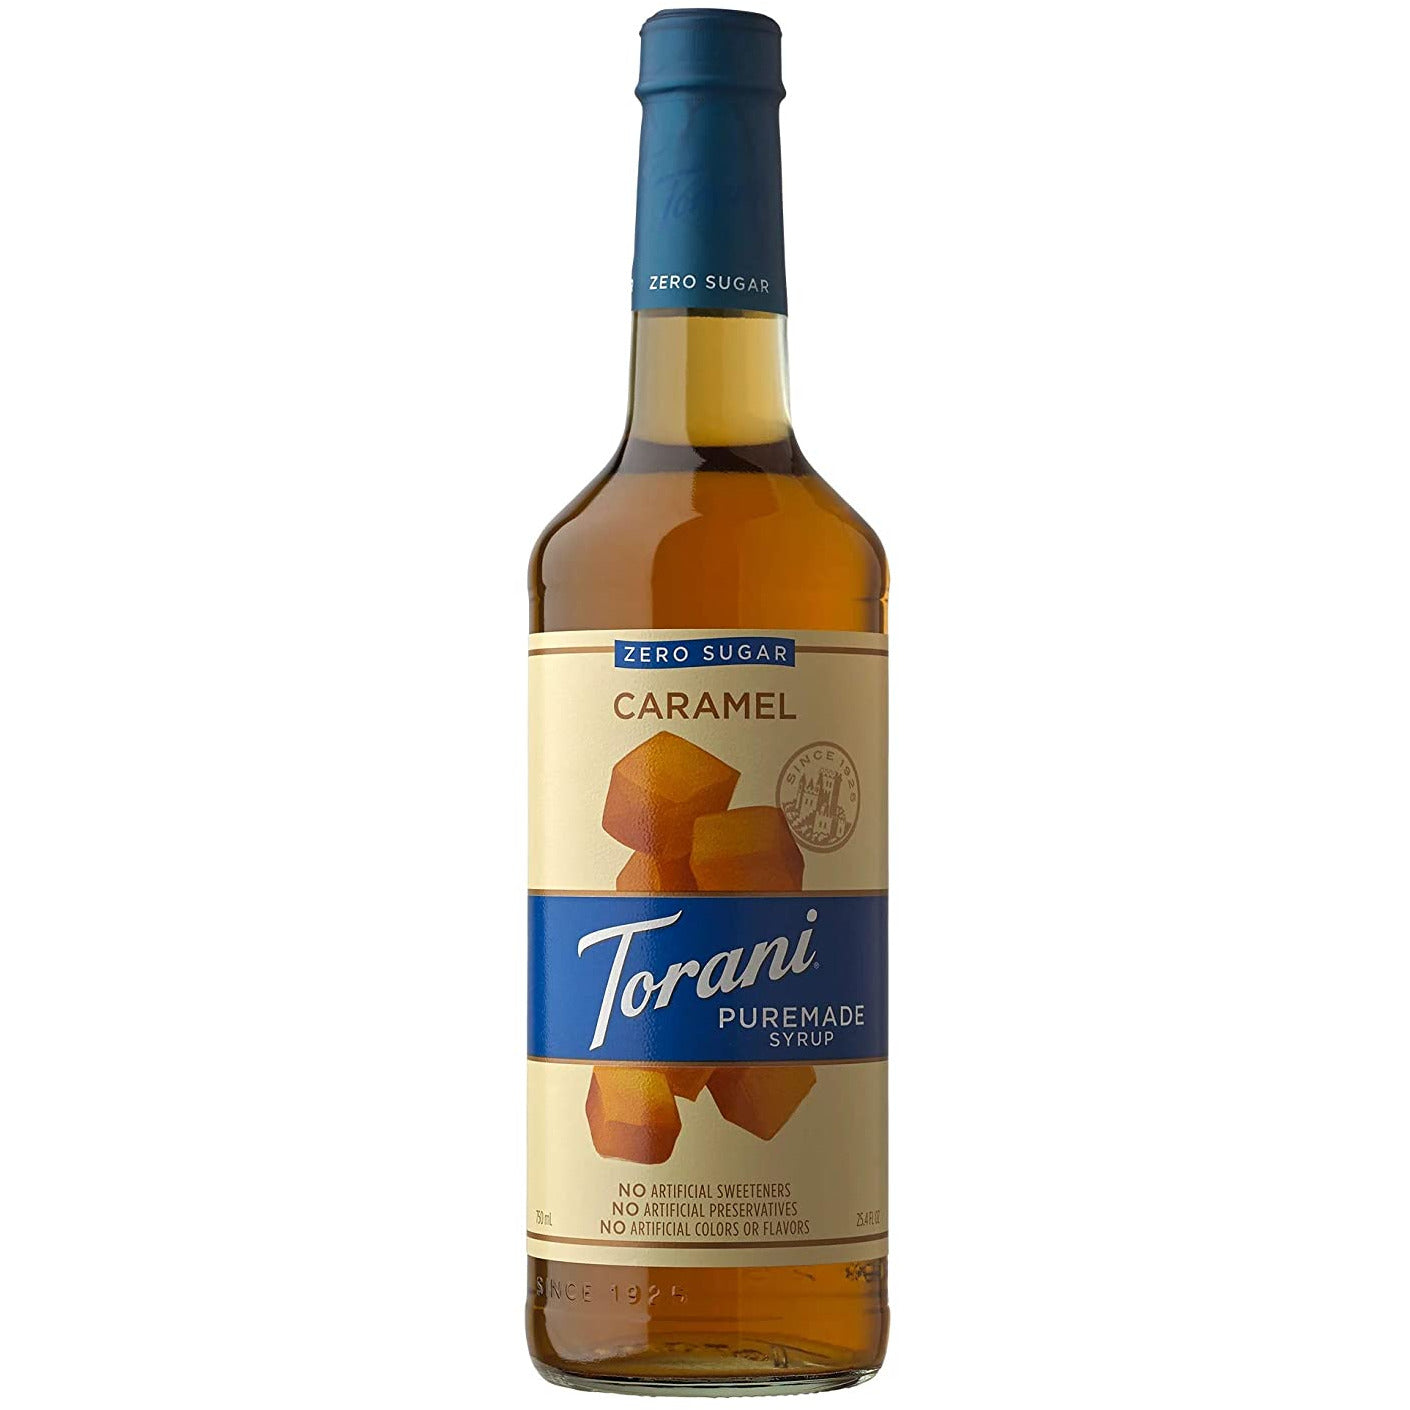 Torani Puremade Syrup, Zero Sugar Caramel Flavor